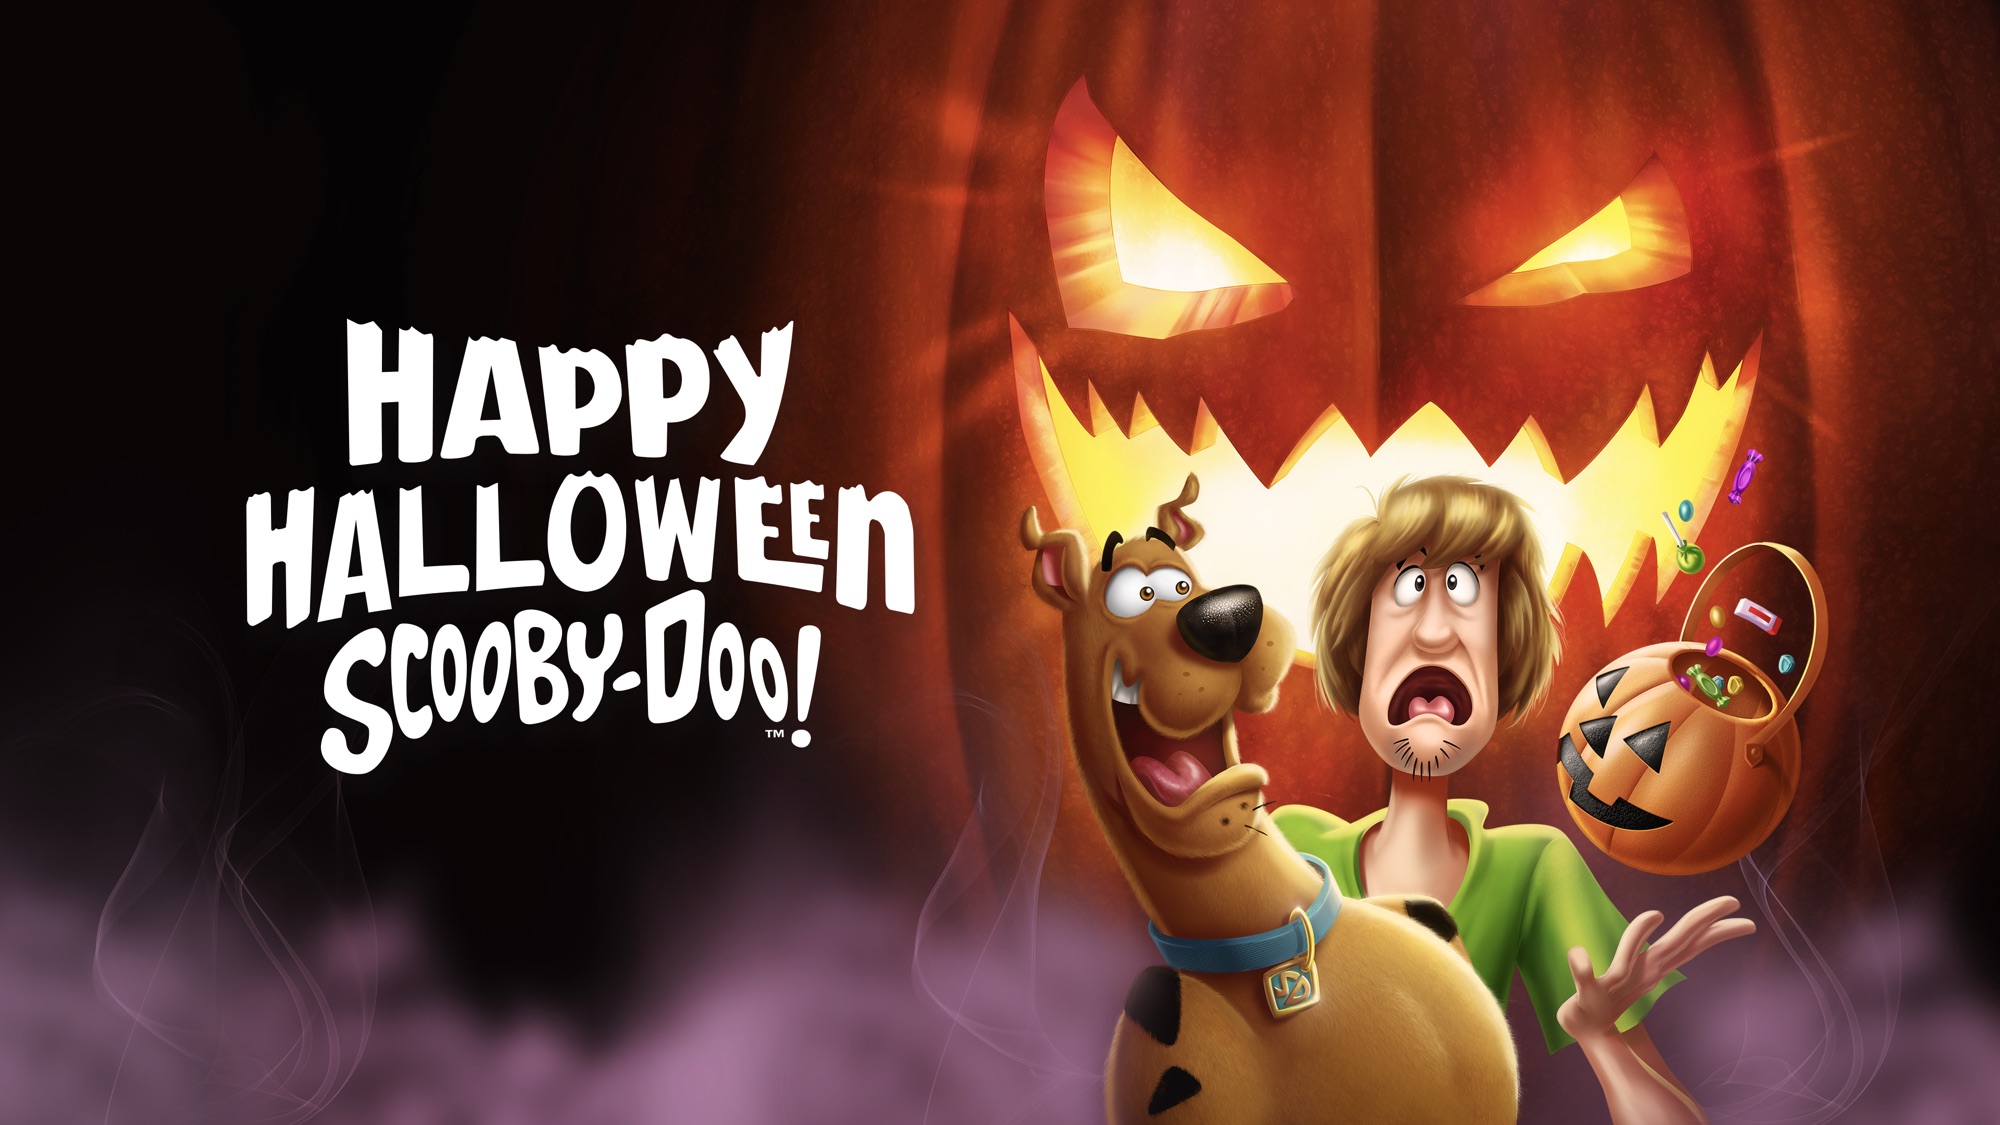 Happy Halloween, Scooby-Doo! on Apple TV